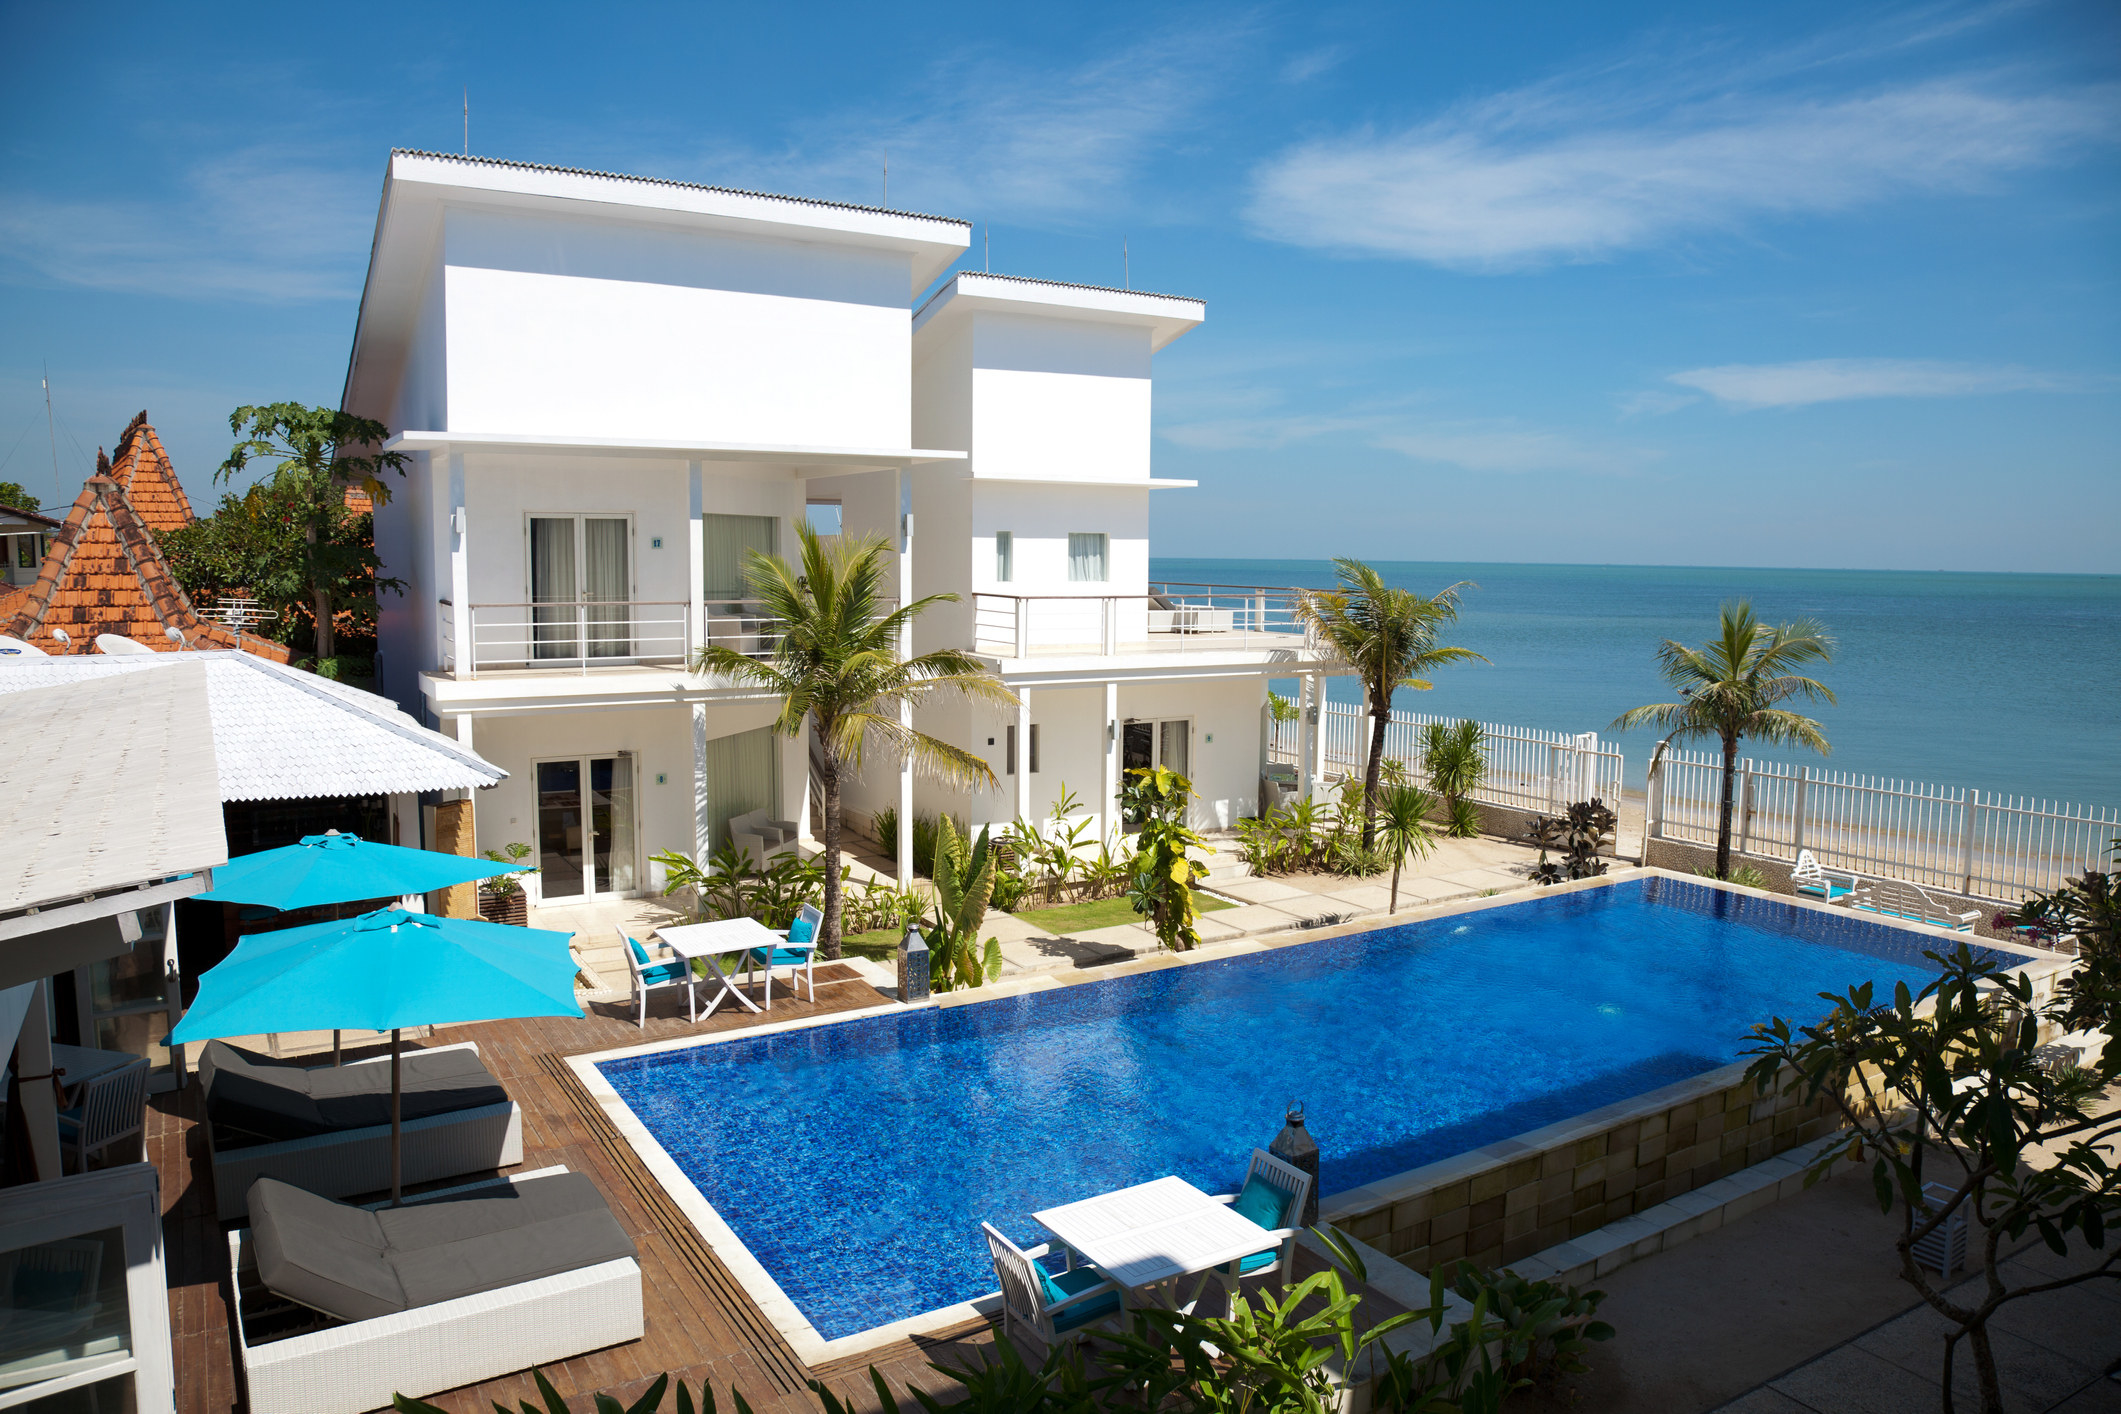 unreasonably nice beach house with a pool